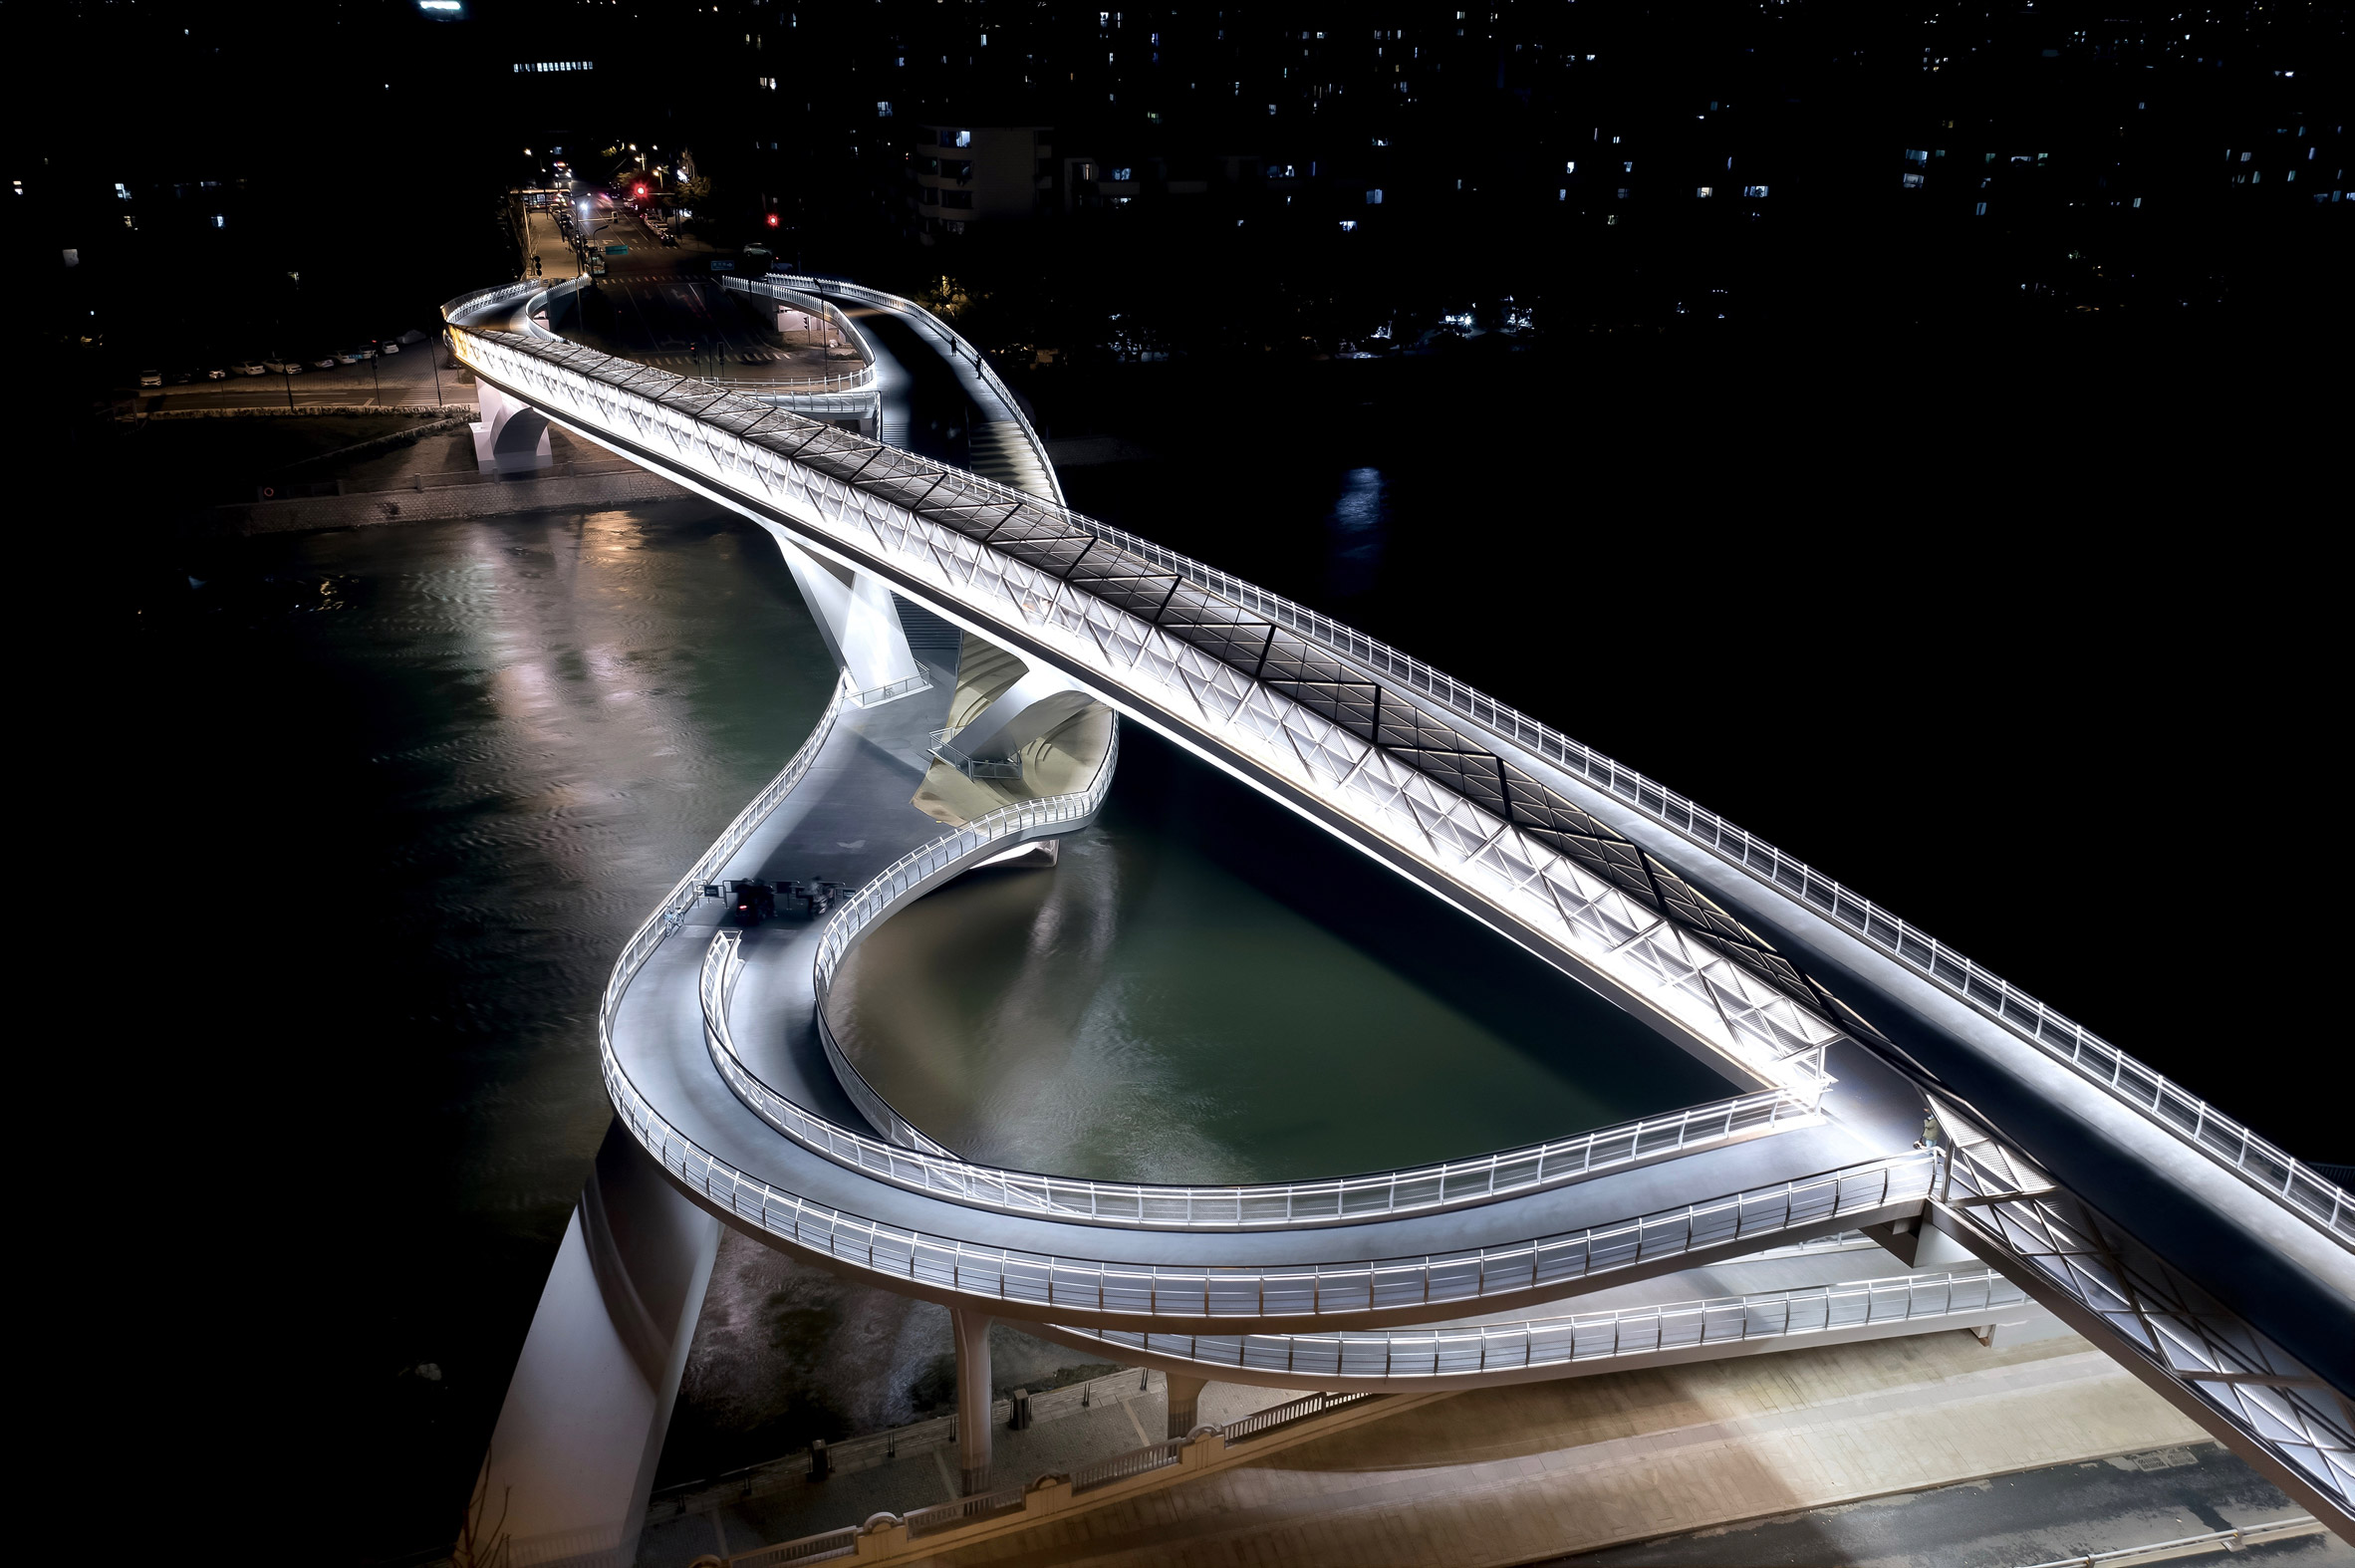 Wuchazi Bridge in Chengdu by architects Tom Wünschmann, Achim Kaufer, Wei Cai and Philipp Buschmeyer and Chinese design institutes SADI and JDTM